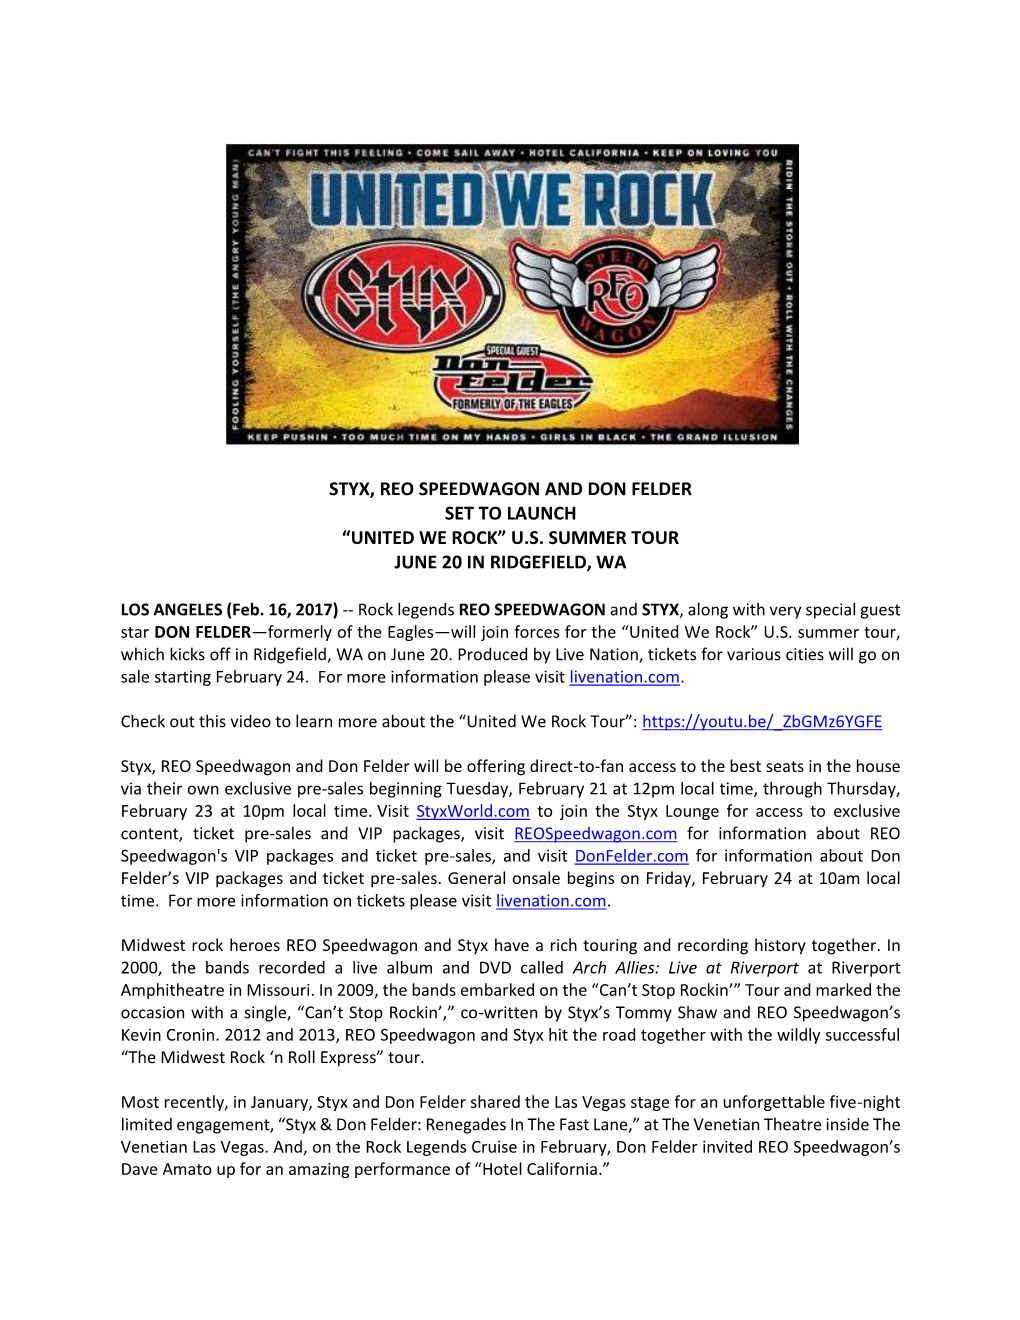 Styx, Reo Speedwagon and Don Felder Set to Launch “United We Rock” U.S